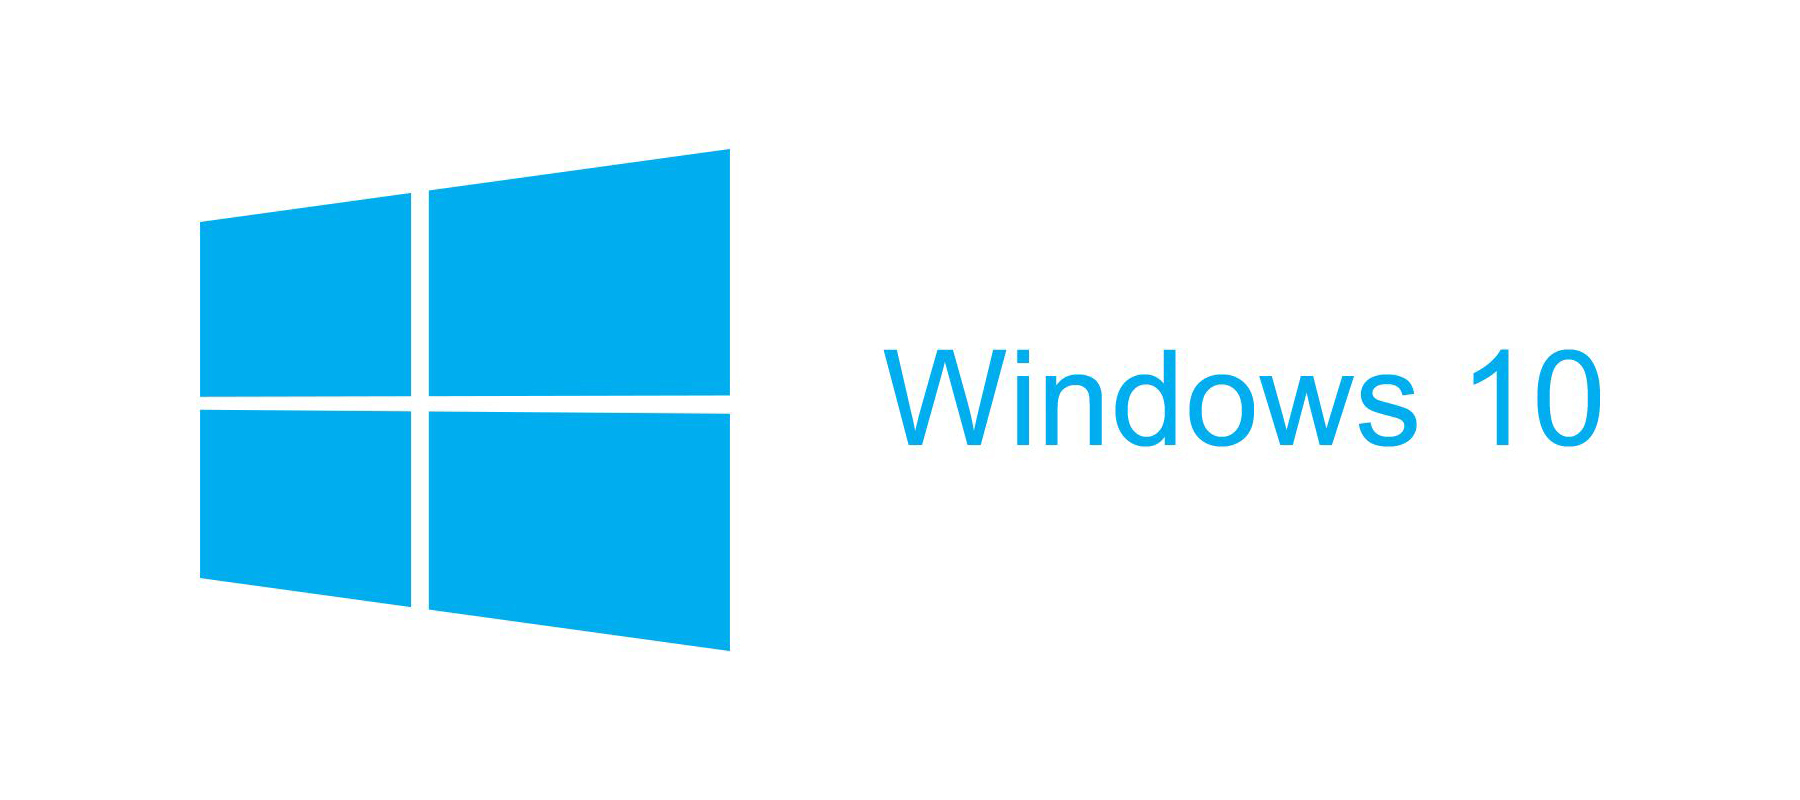 Demo windows. ОС Microsoft Windows 10. Логотип Windows. Microsoft Windows логотип. Логотип Windows 10.